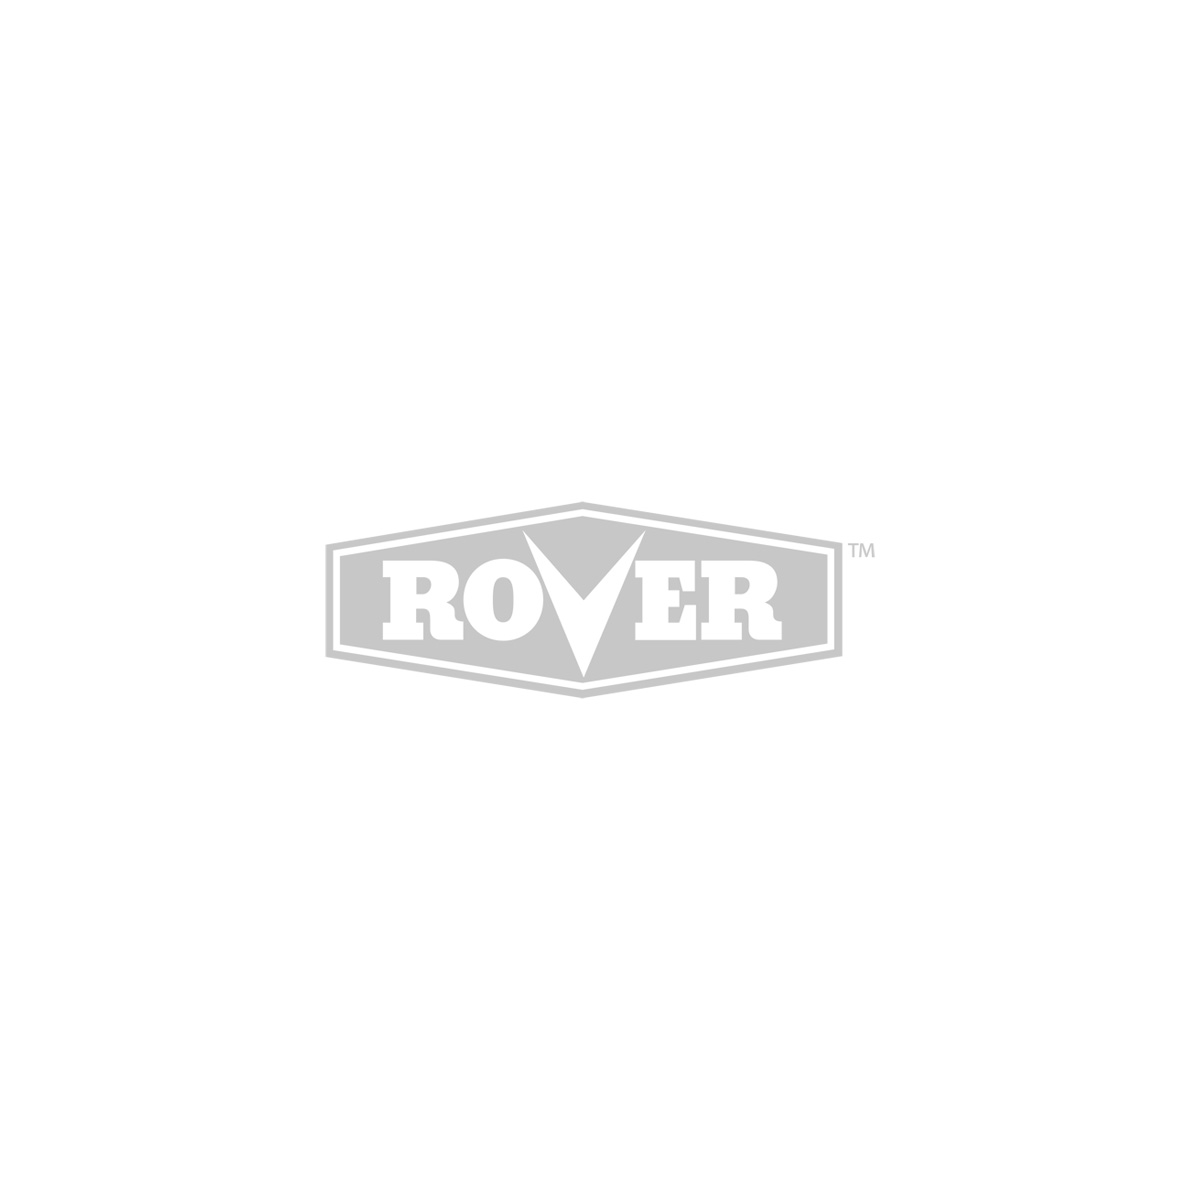 Rover 4 Litre Chain & Bar ISO 150 Oil